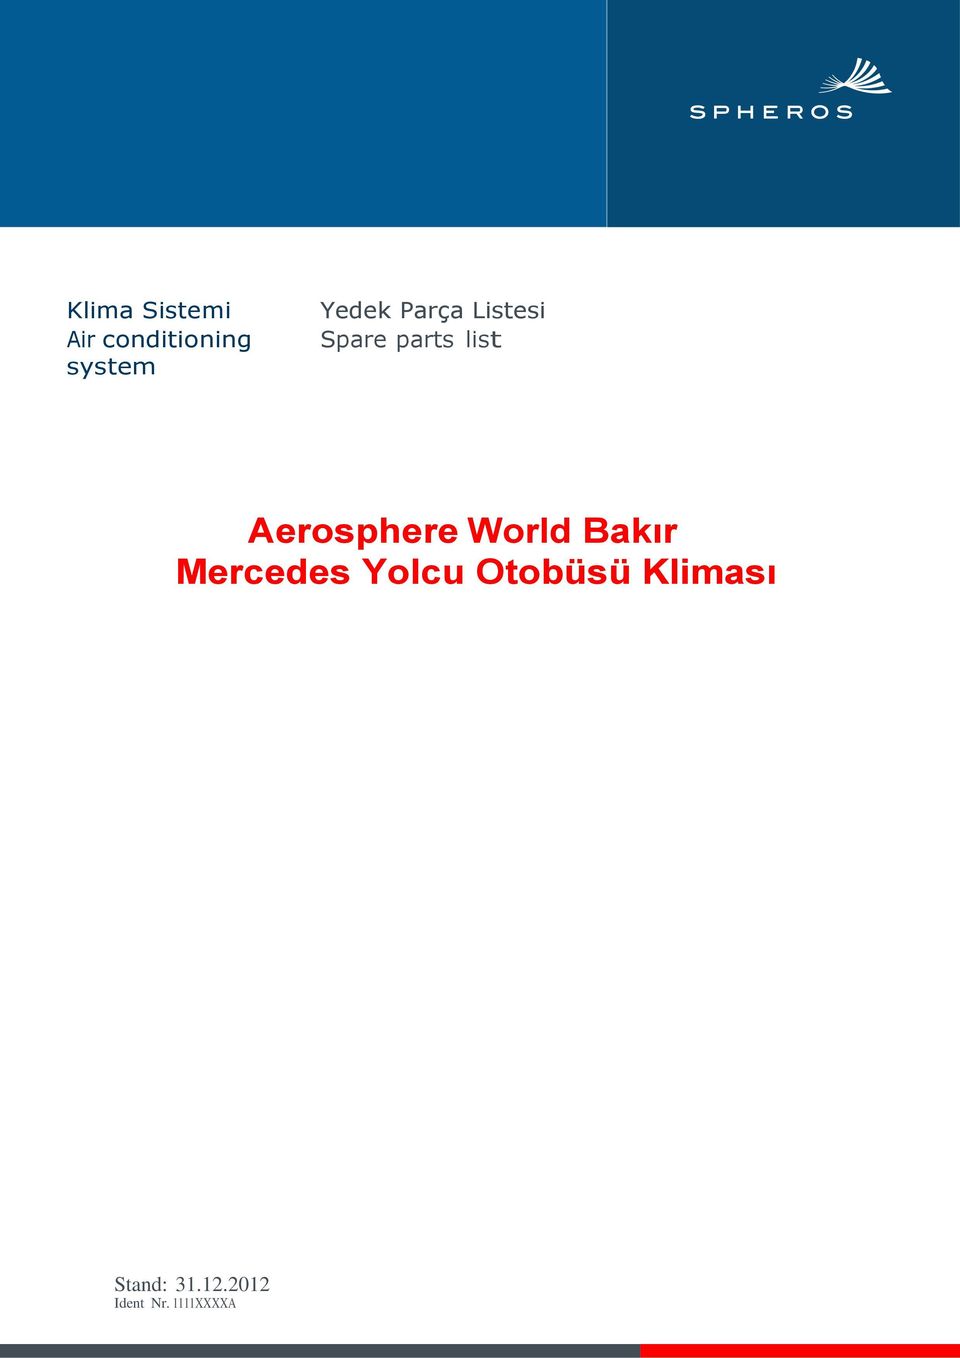 Aerosphere World Bakır Mercedes Yolcu